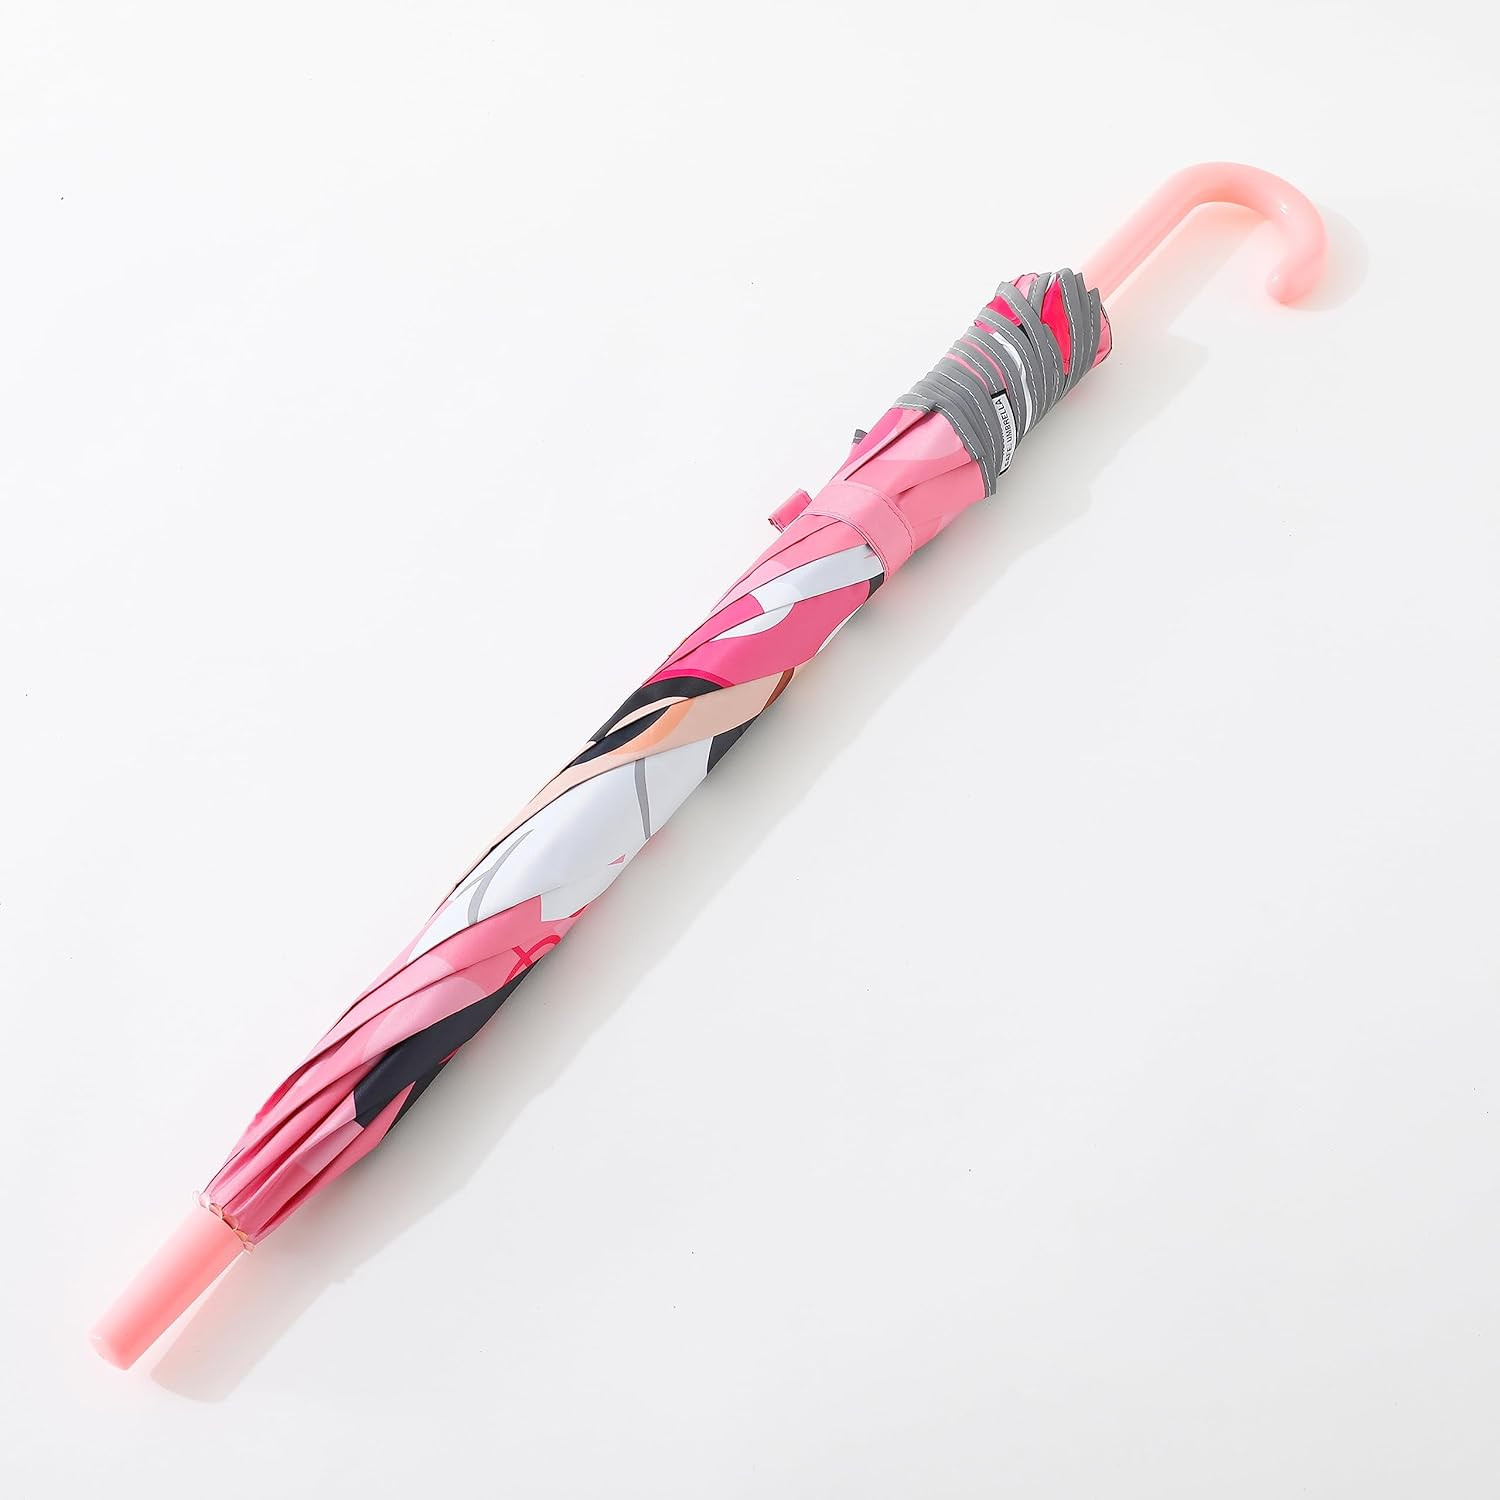 Kuber Industries Disney Minnie Print Umbrella For Kids|Automatic Umbrella For Rain (Pink)